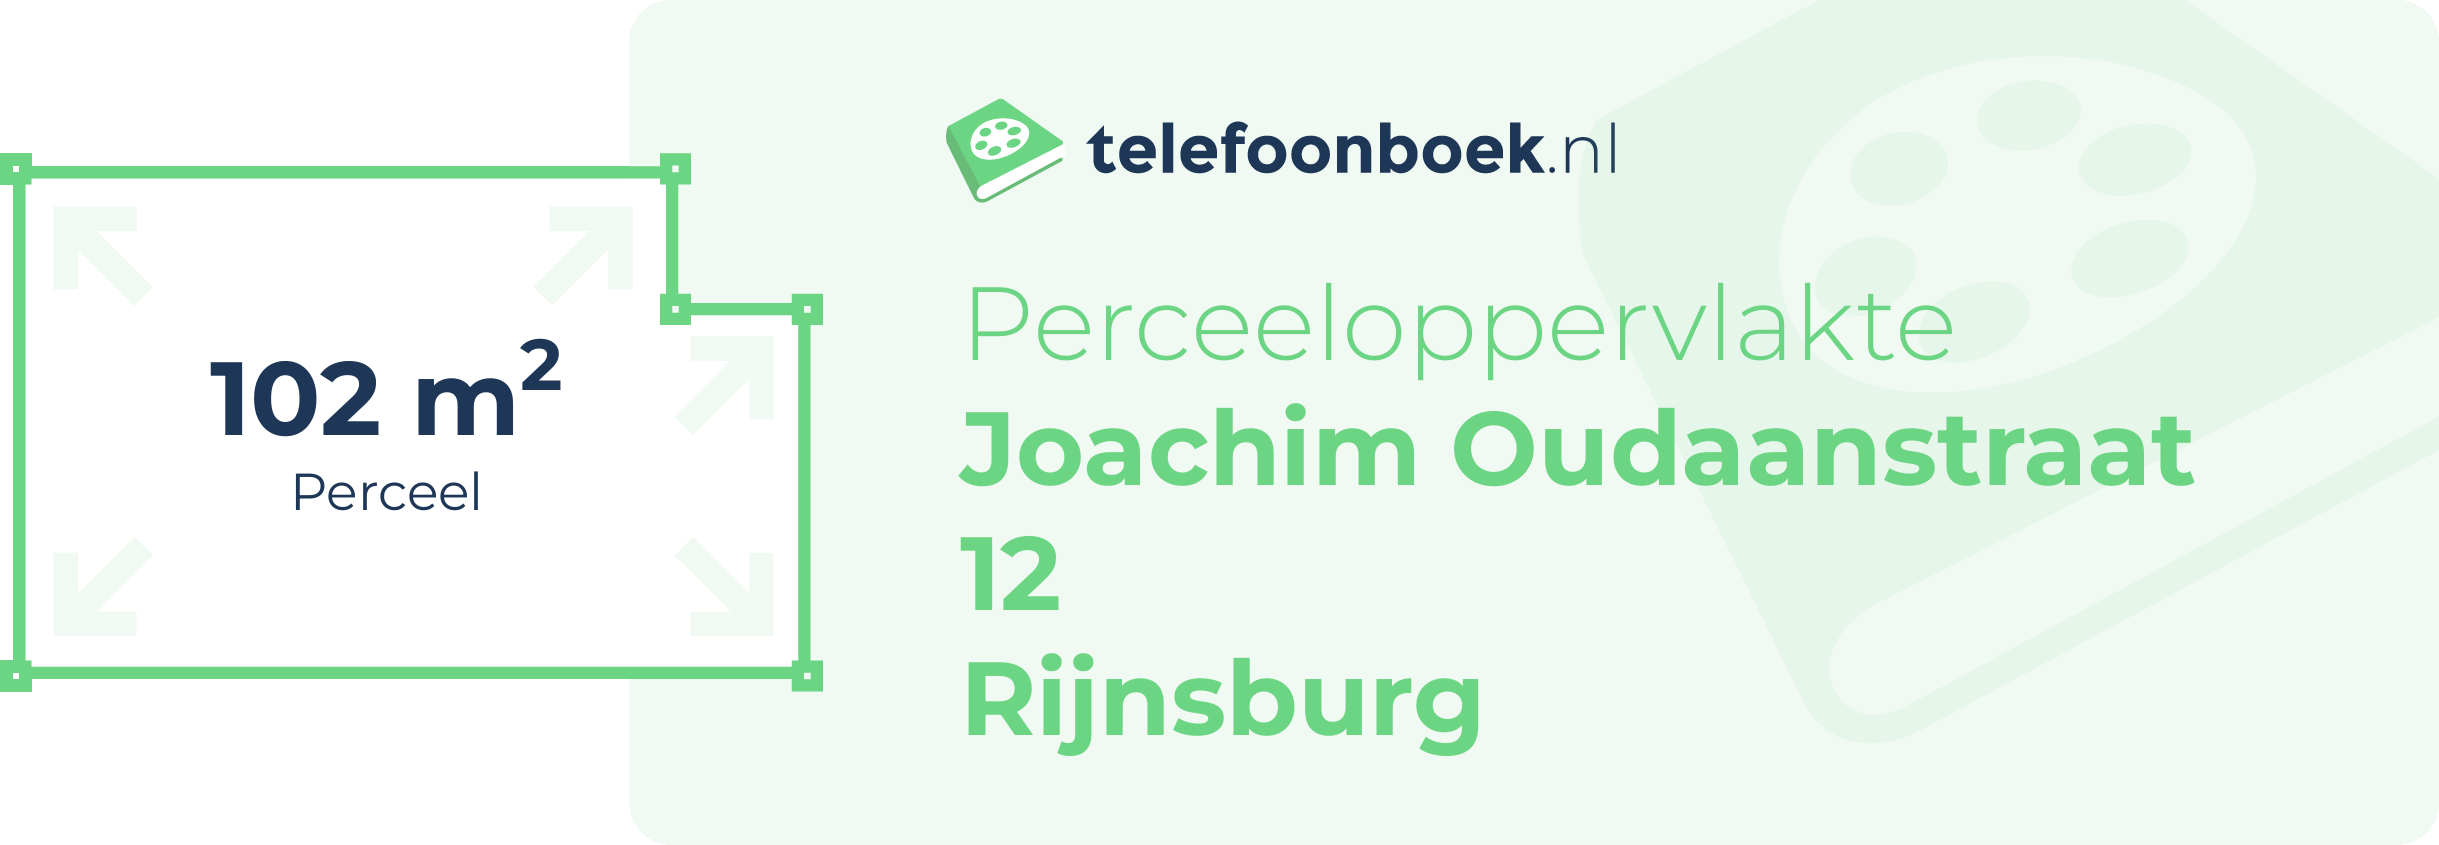 Perceeloppervlakte Joachim Oudaanstraat 12 Rijnsburg